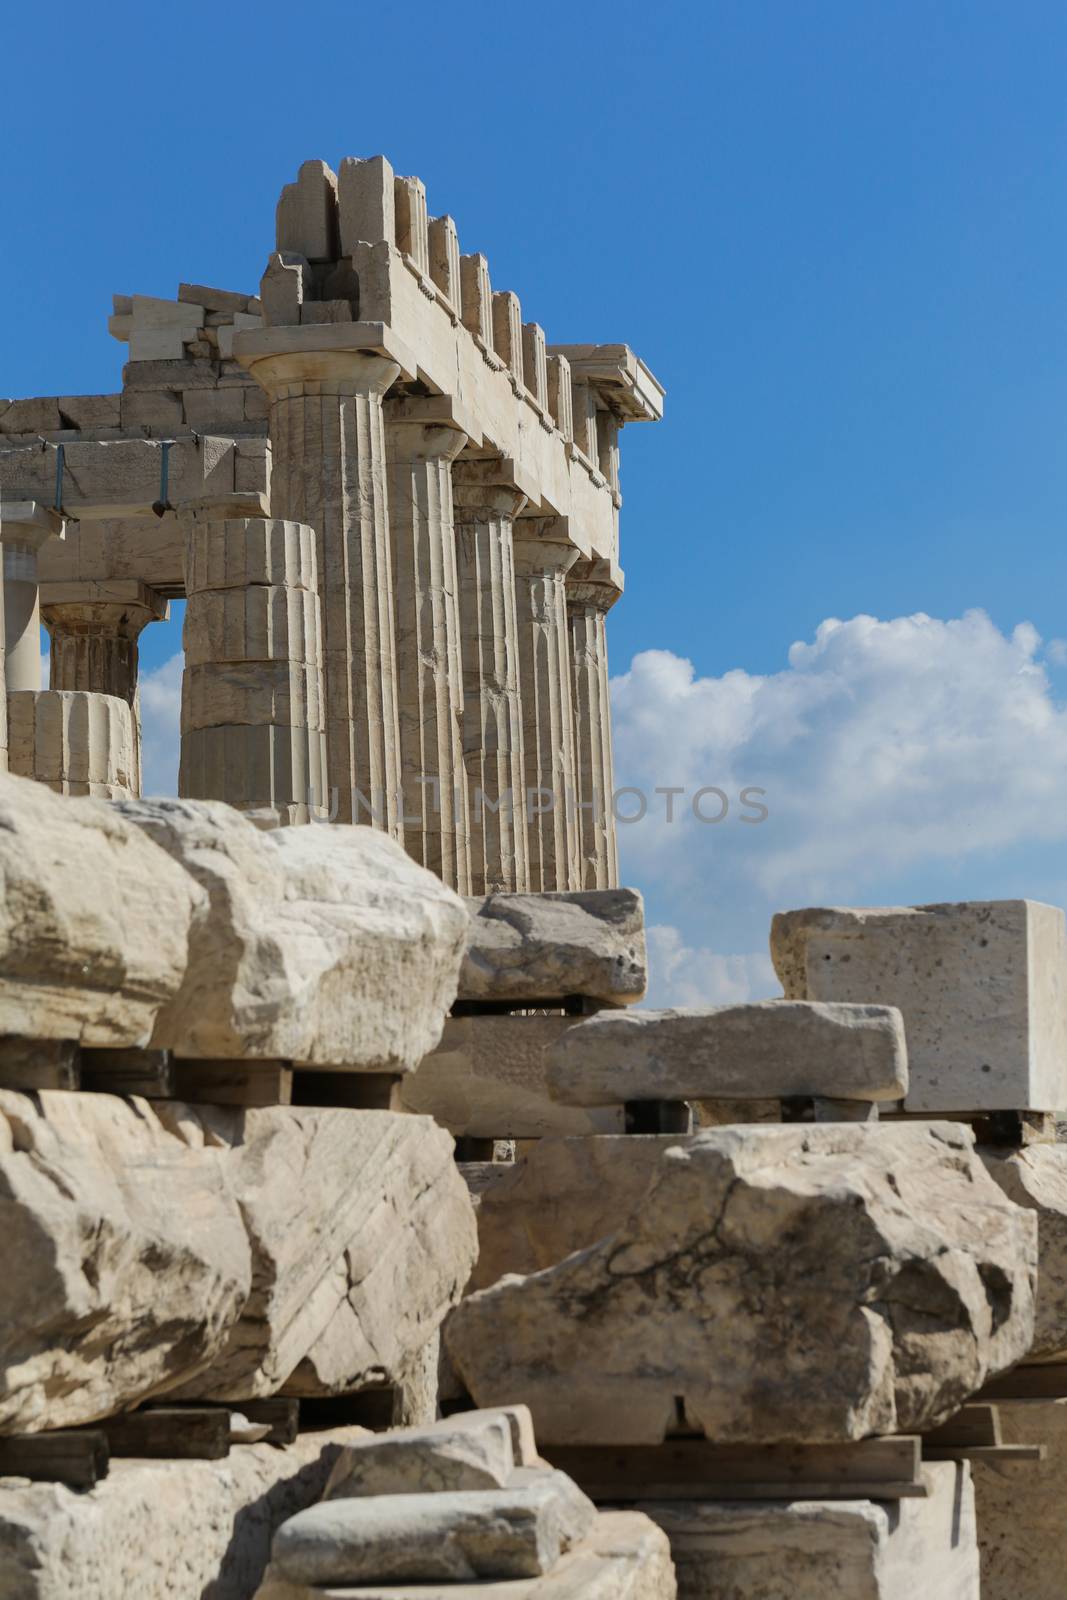 The Parthenon at the Acropolis in Athens, Greece